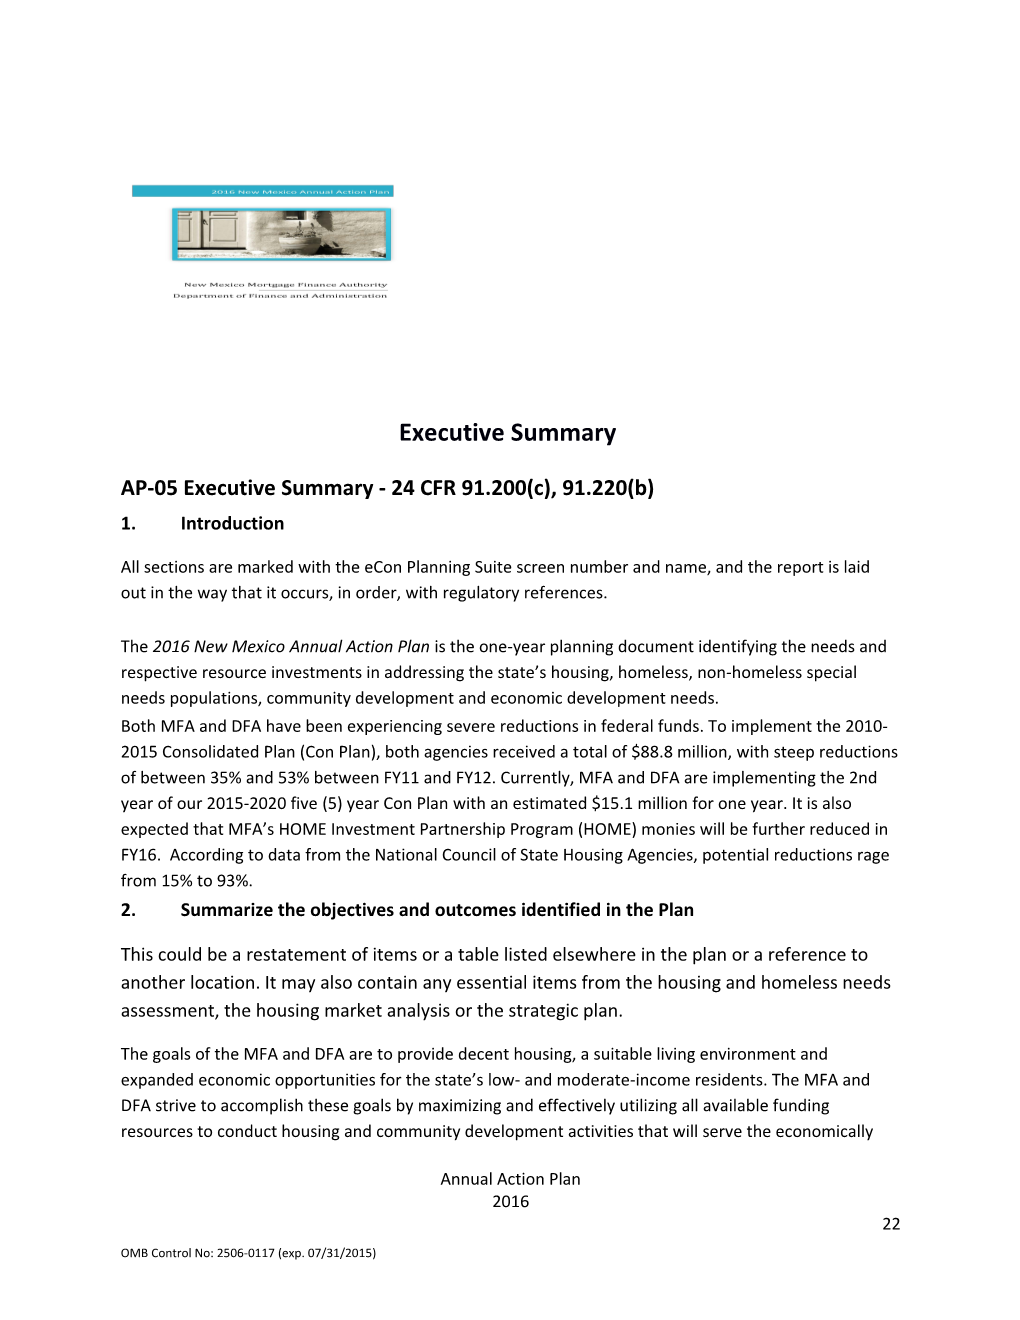 AP-05 Executive Summary - 24 CFR 91.200(C), 91.220(B)